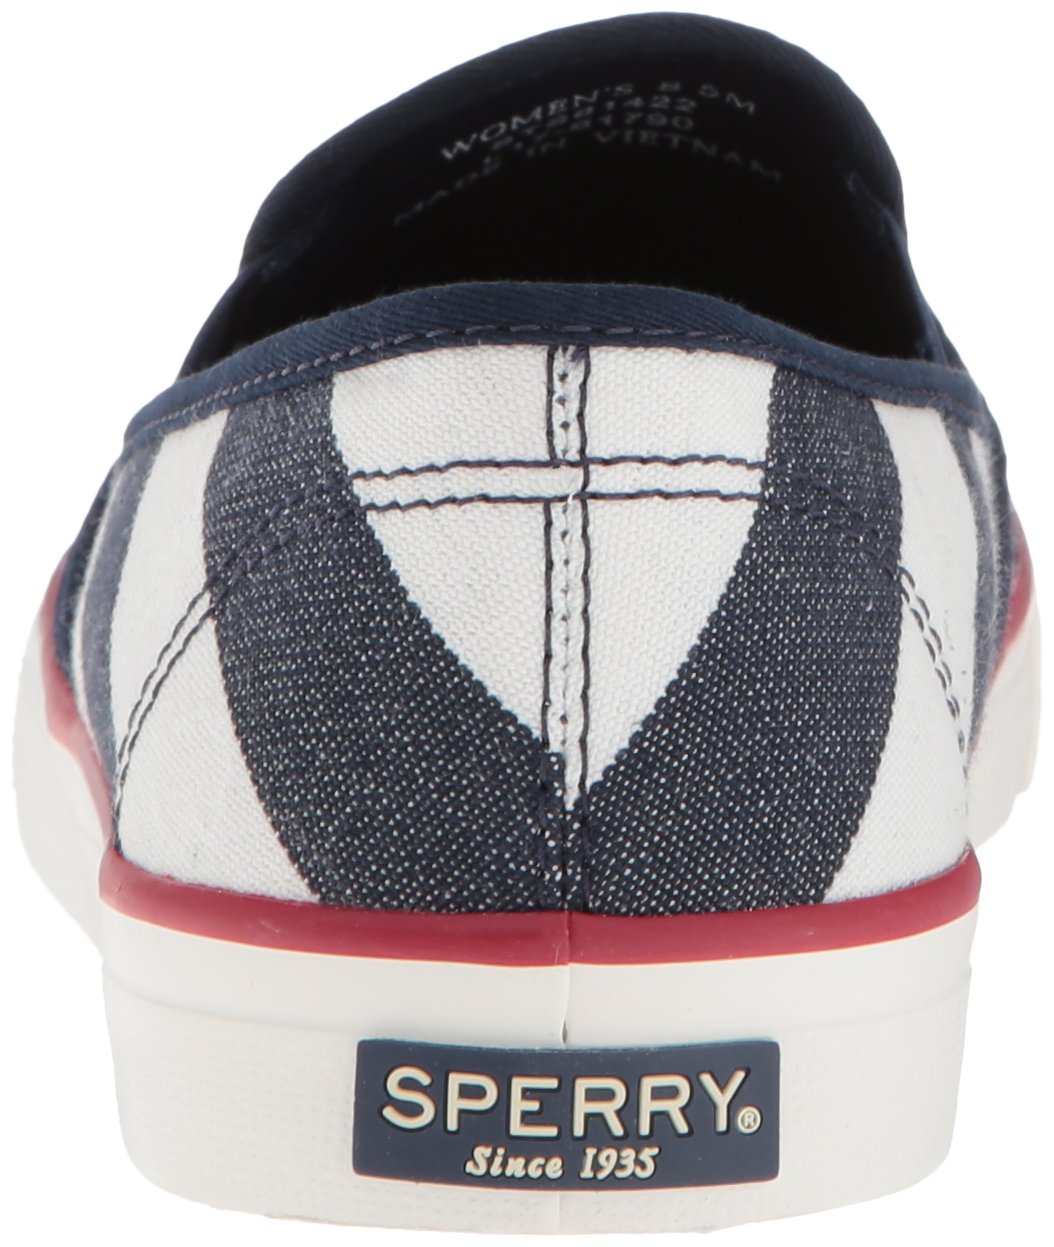 Sperry Seaside Breton Stripe NYCK - New York City Kicks